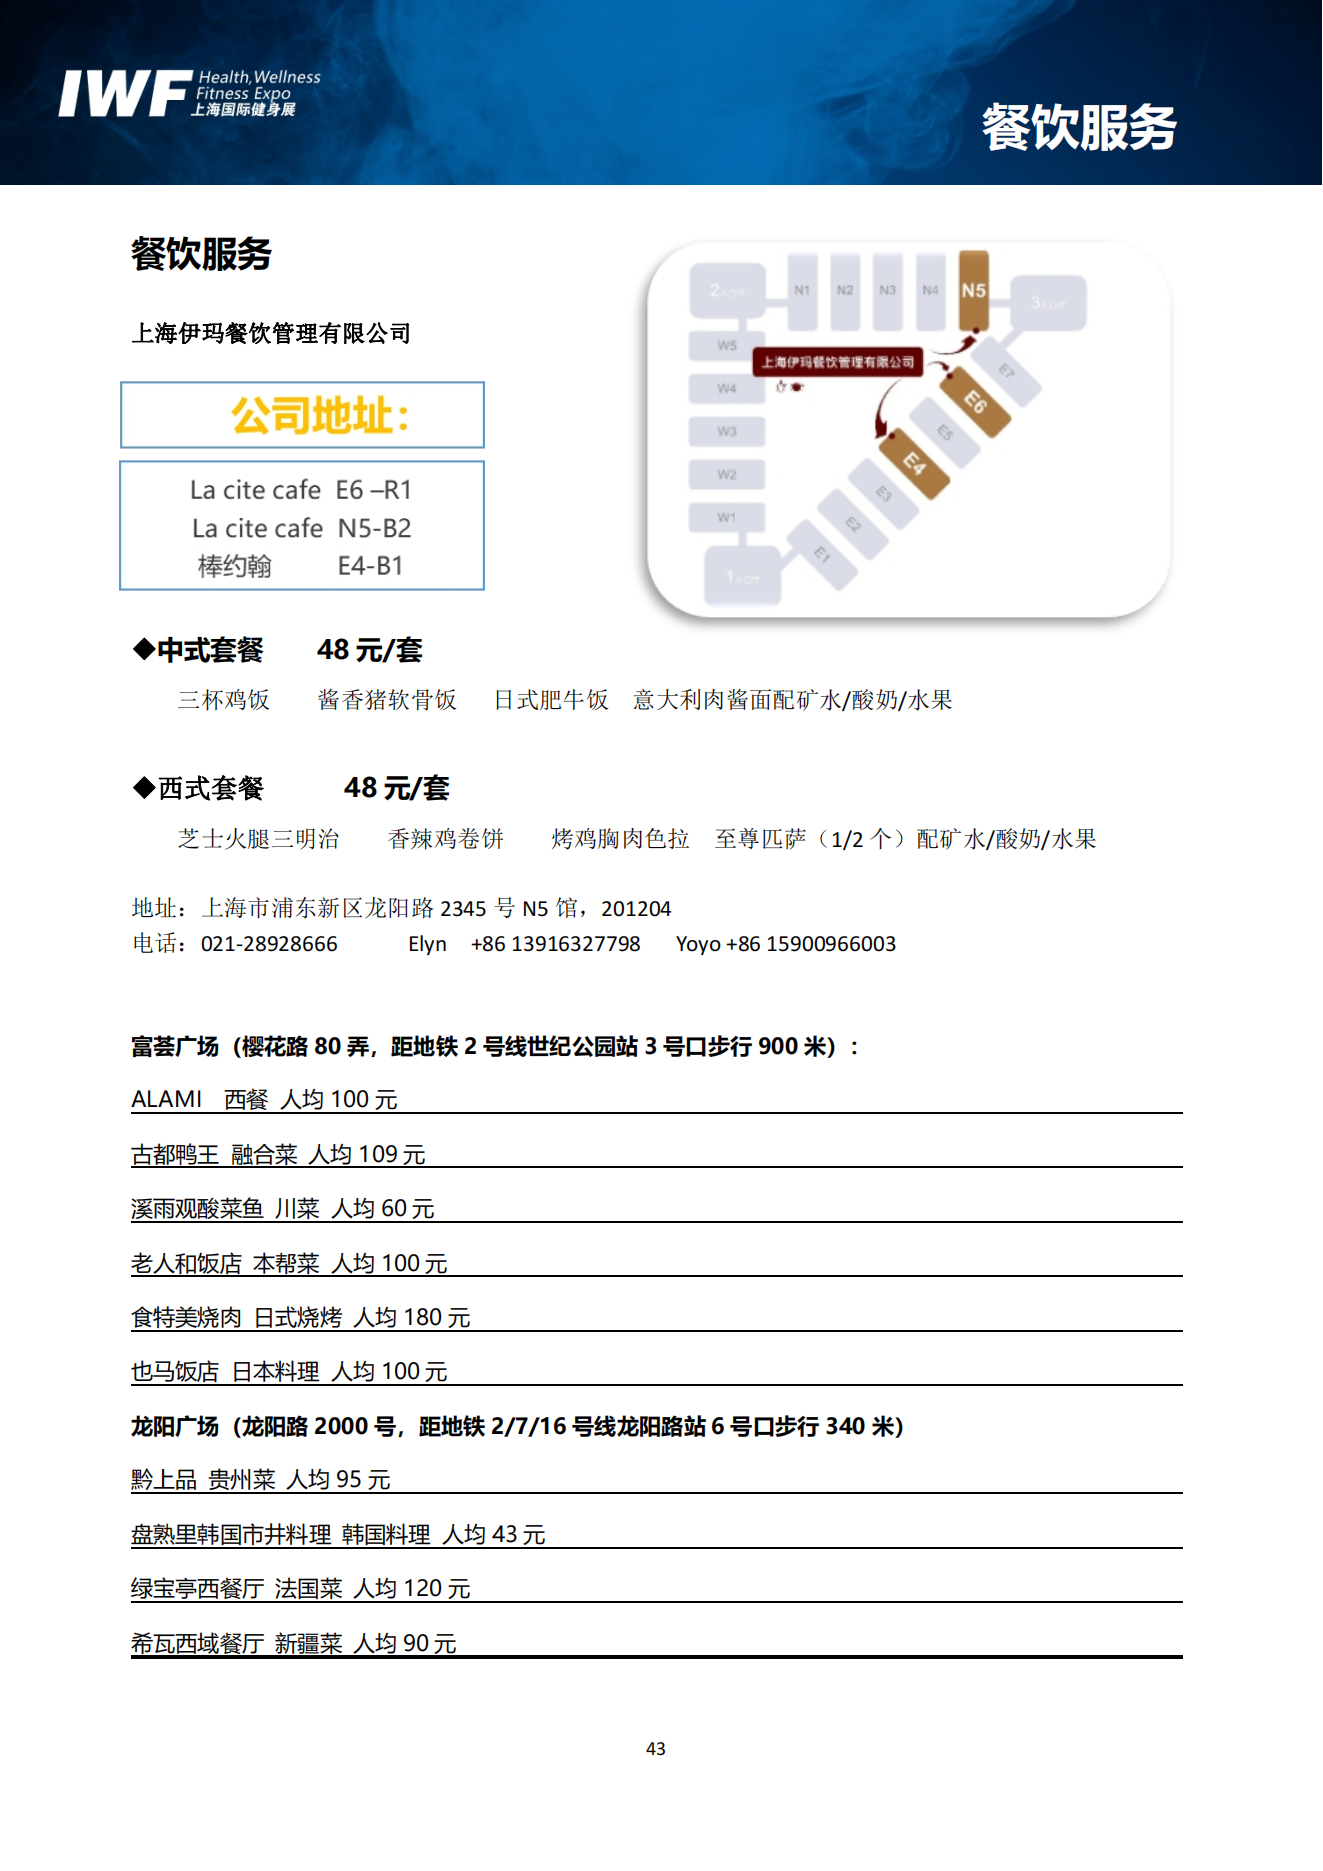 IWF SHANGHAI 2021 上海国际健身展参展手册_42.png